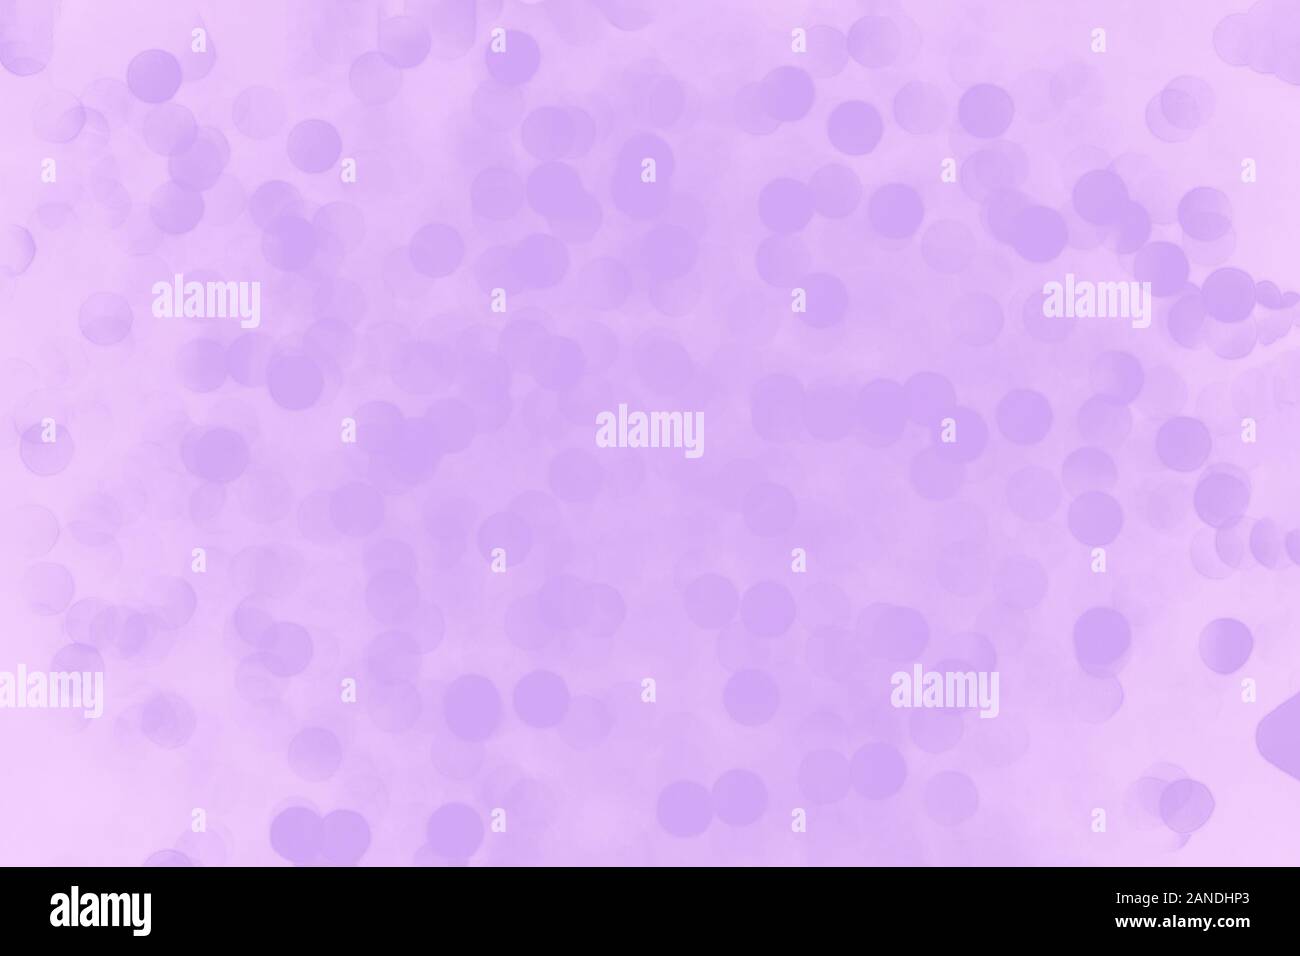 Fondos de pantalla violeta fotografías e imágenes de alta resolución - Alamy